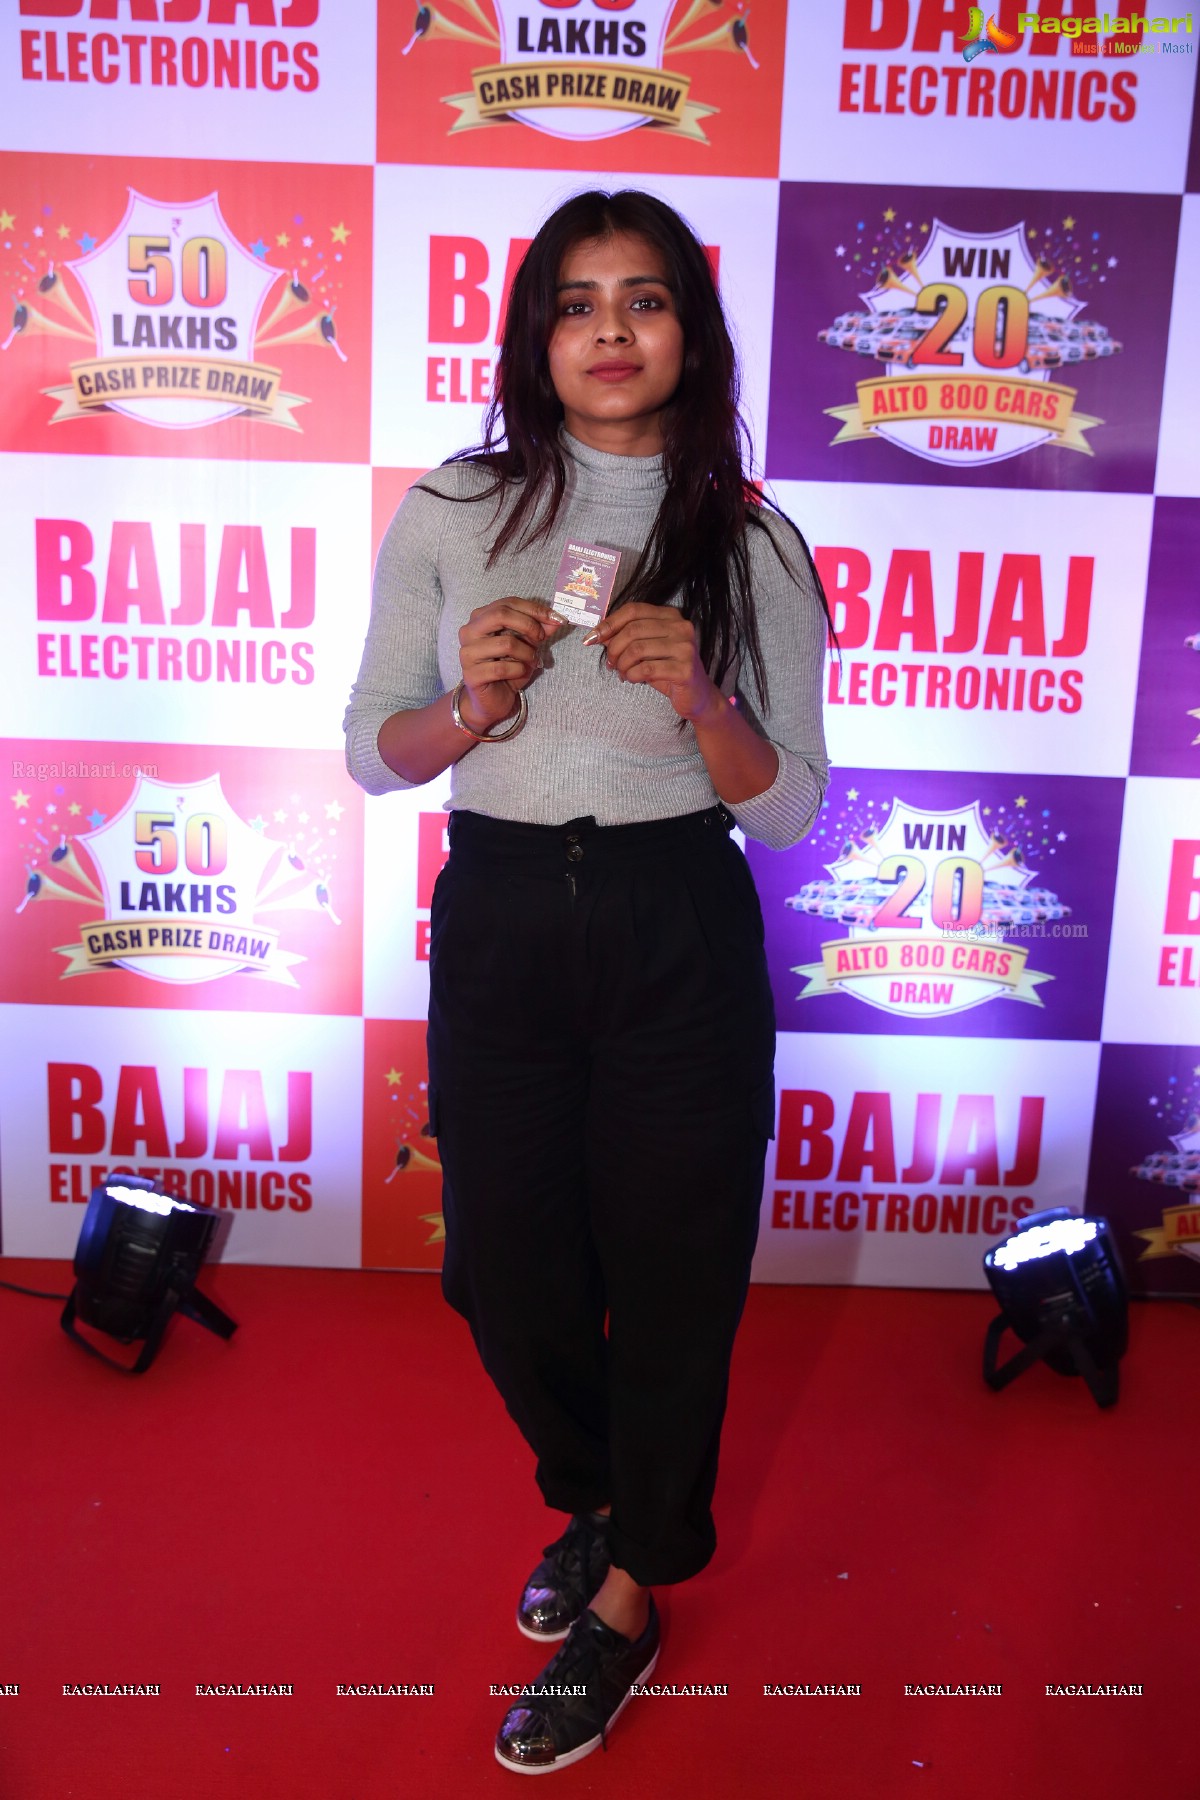 Bajaj Electronics Grand Bumper Draw of Rs 50 Lakhs Cash Prize & 20 Alto Cars at Forum Sujana Mall, KPHB, Hyderabad